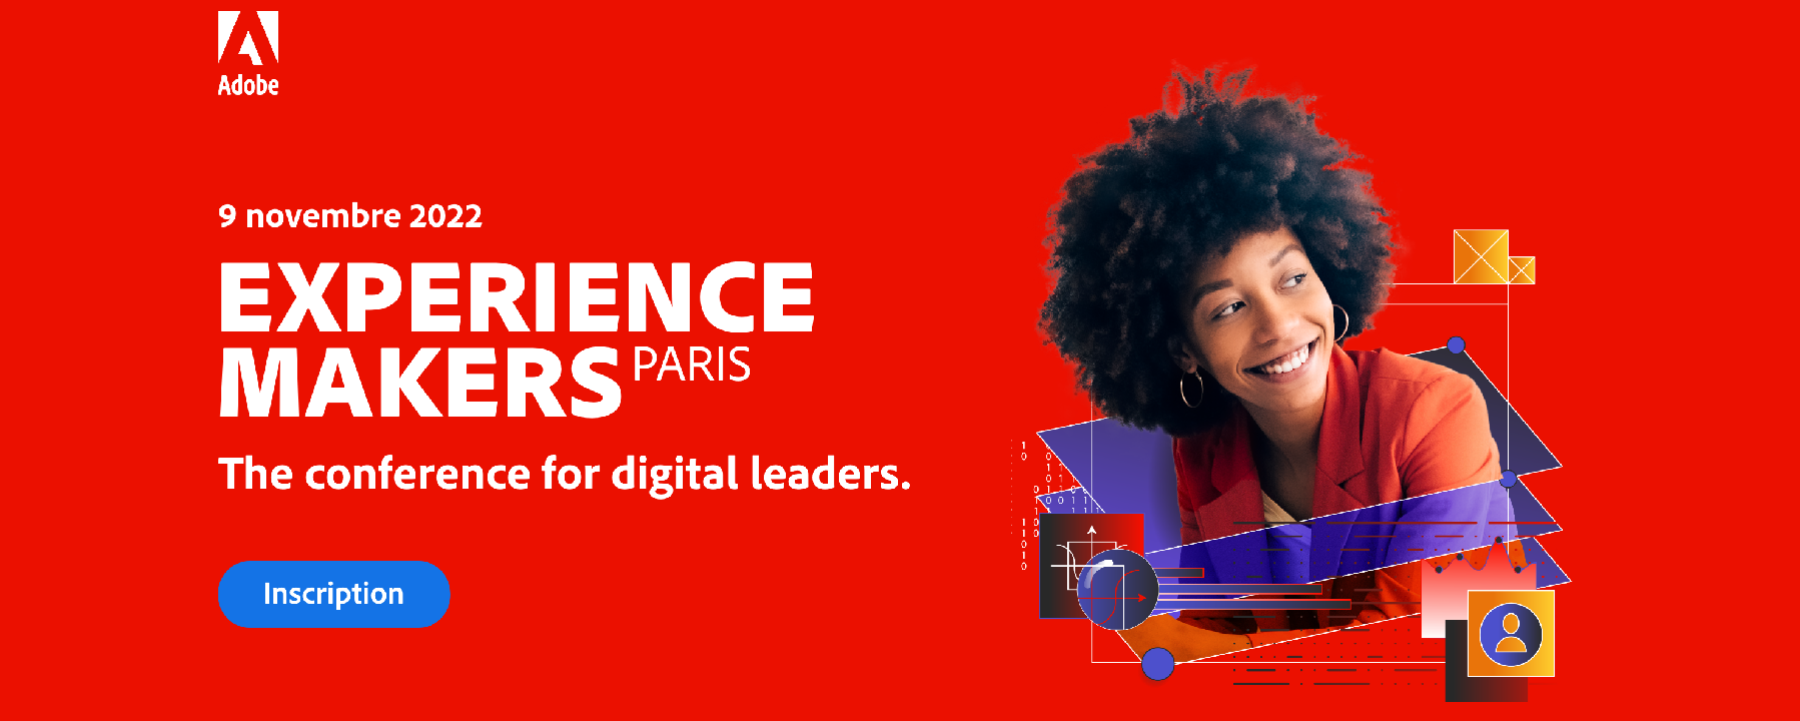 Adobe - Experience Makers Paris